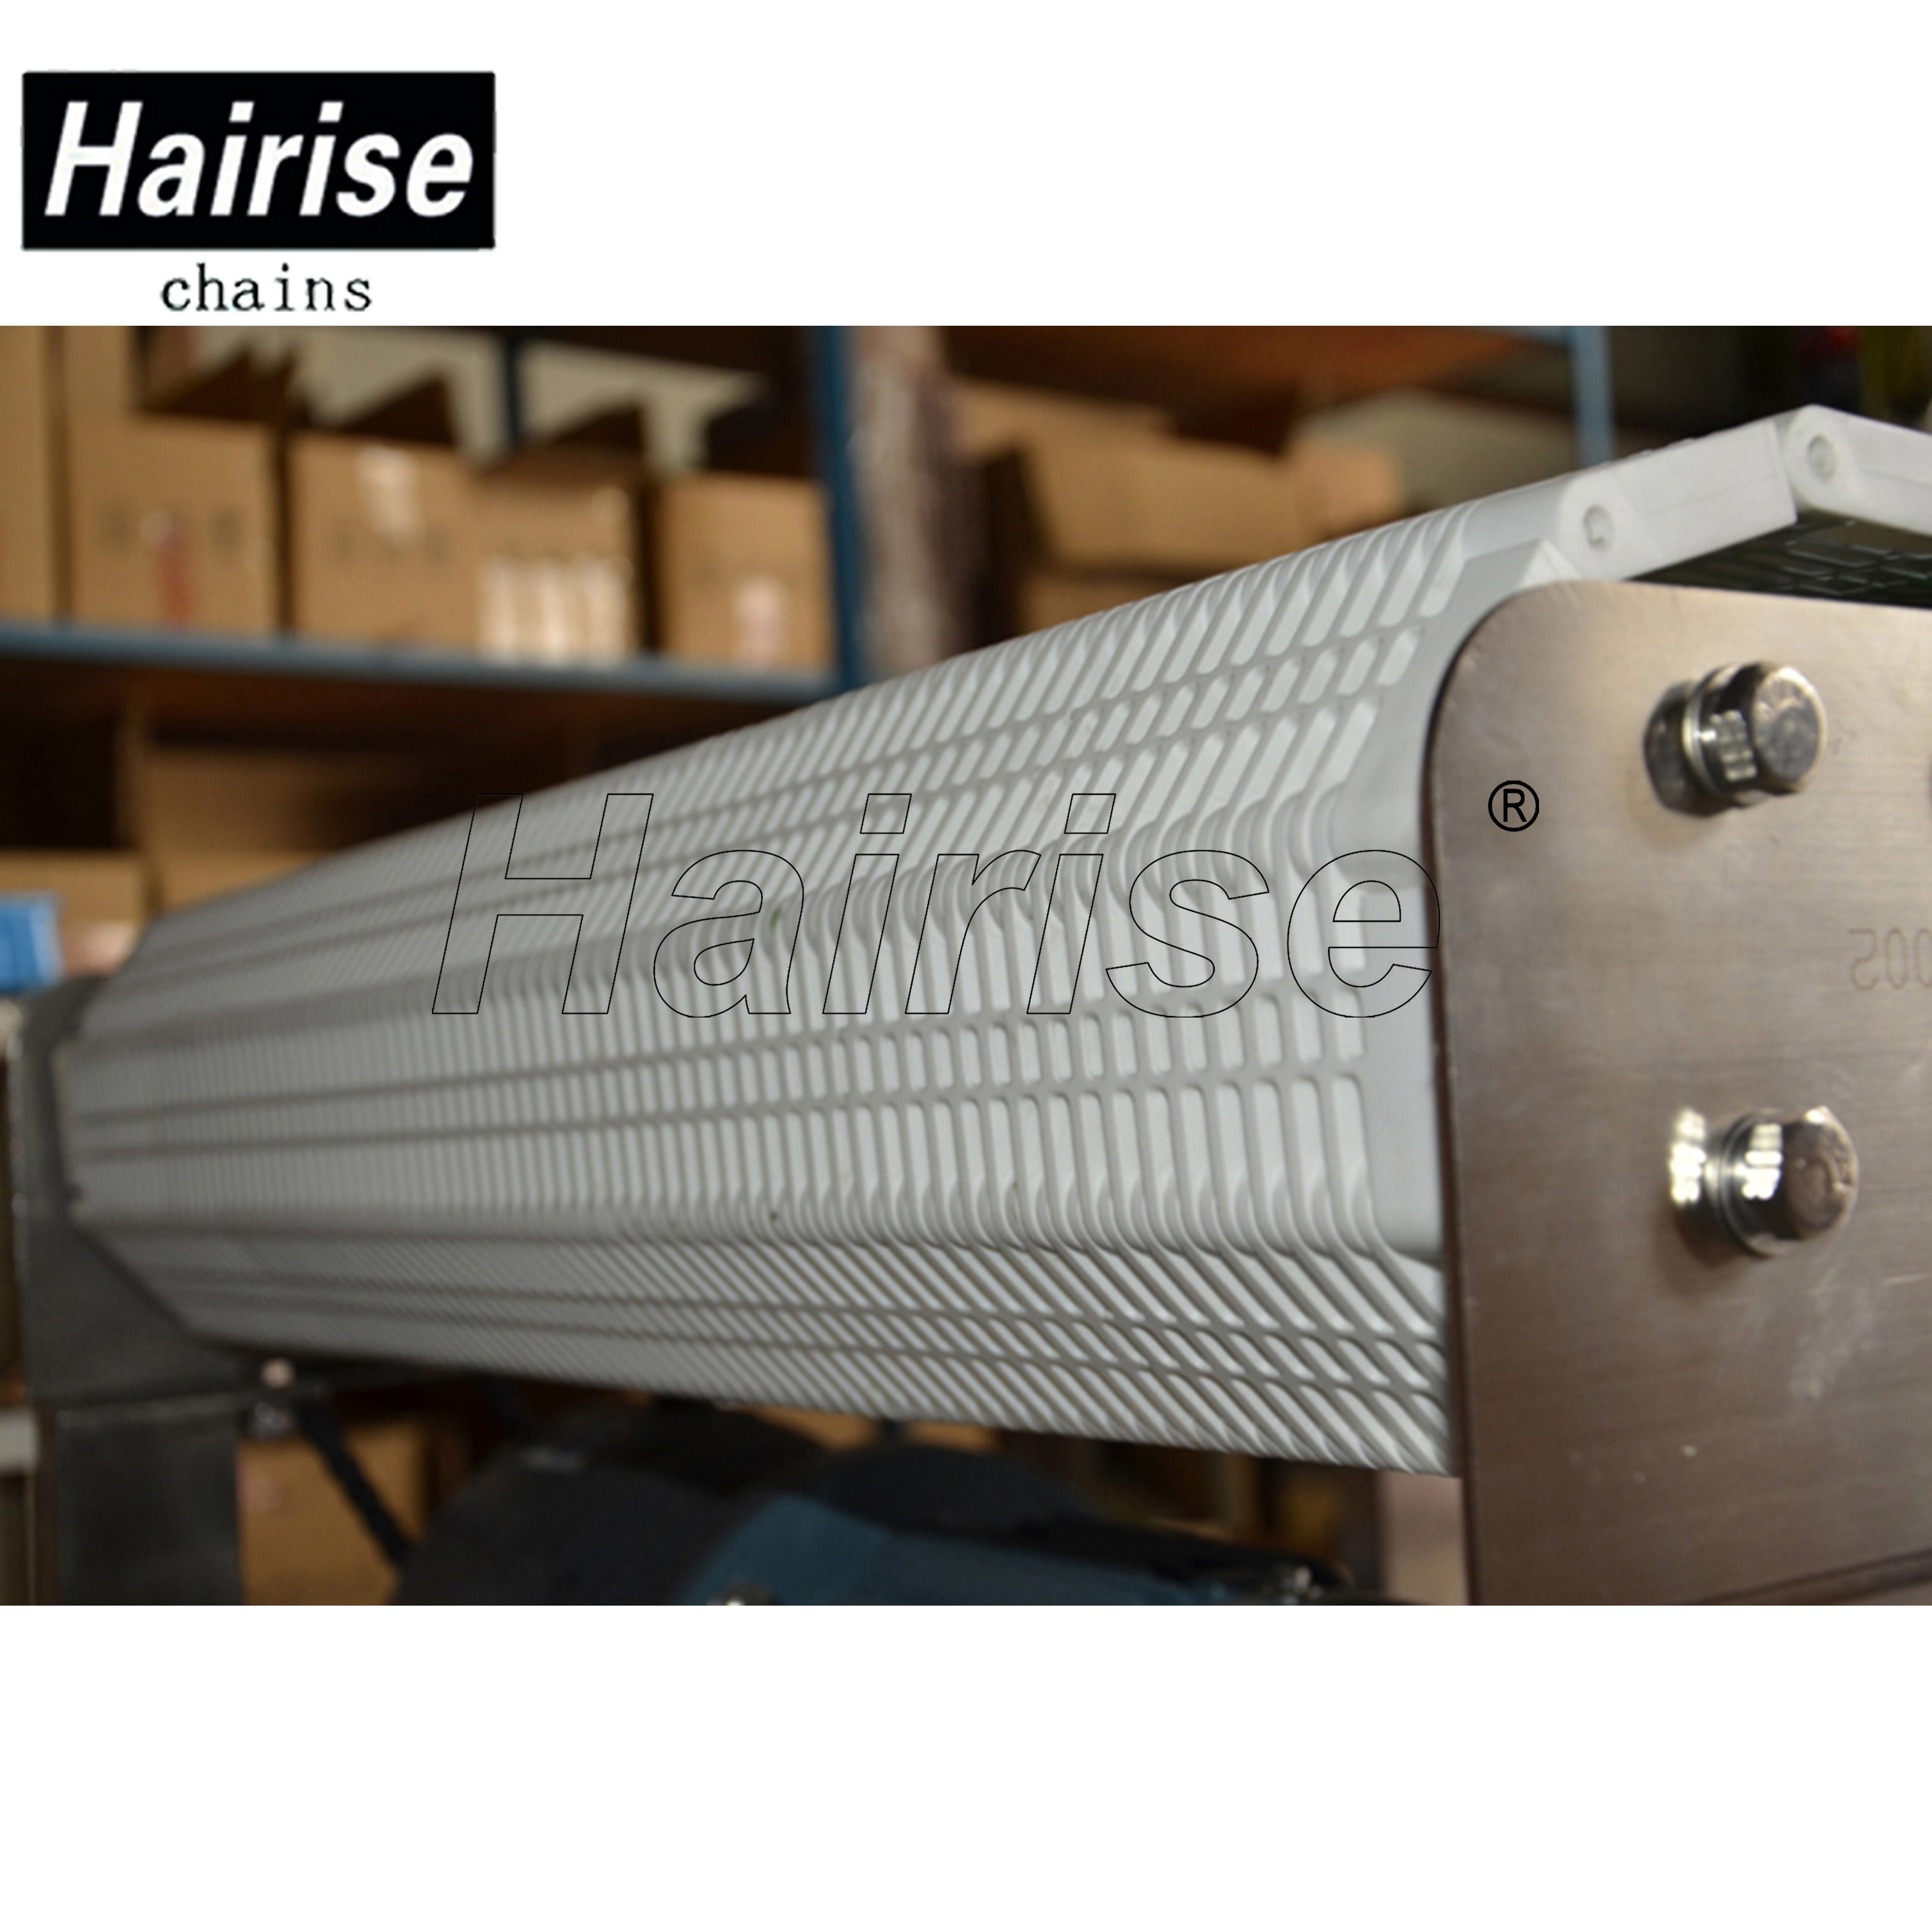 Hairise Straight Conveyor with Modular Belts(Har400)